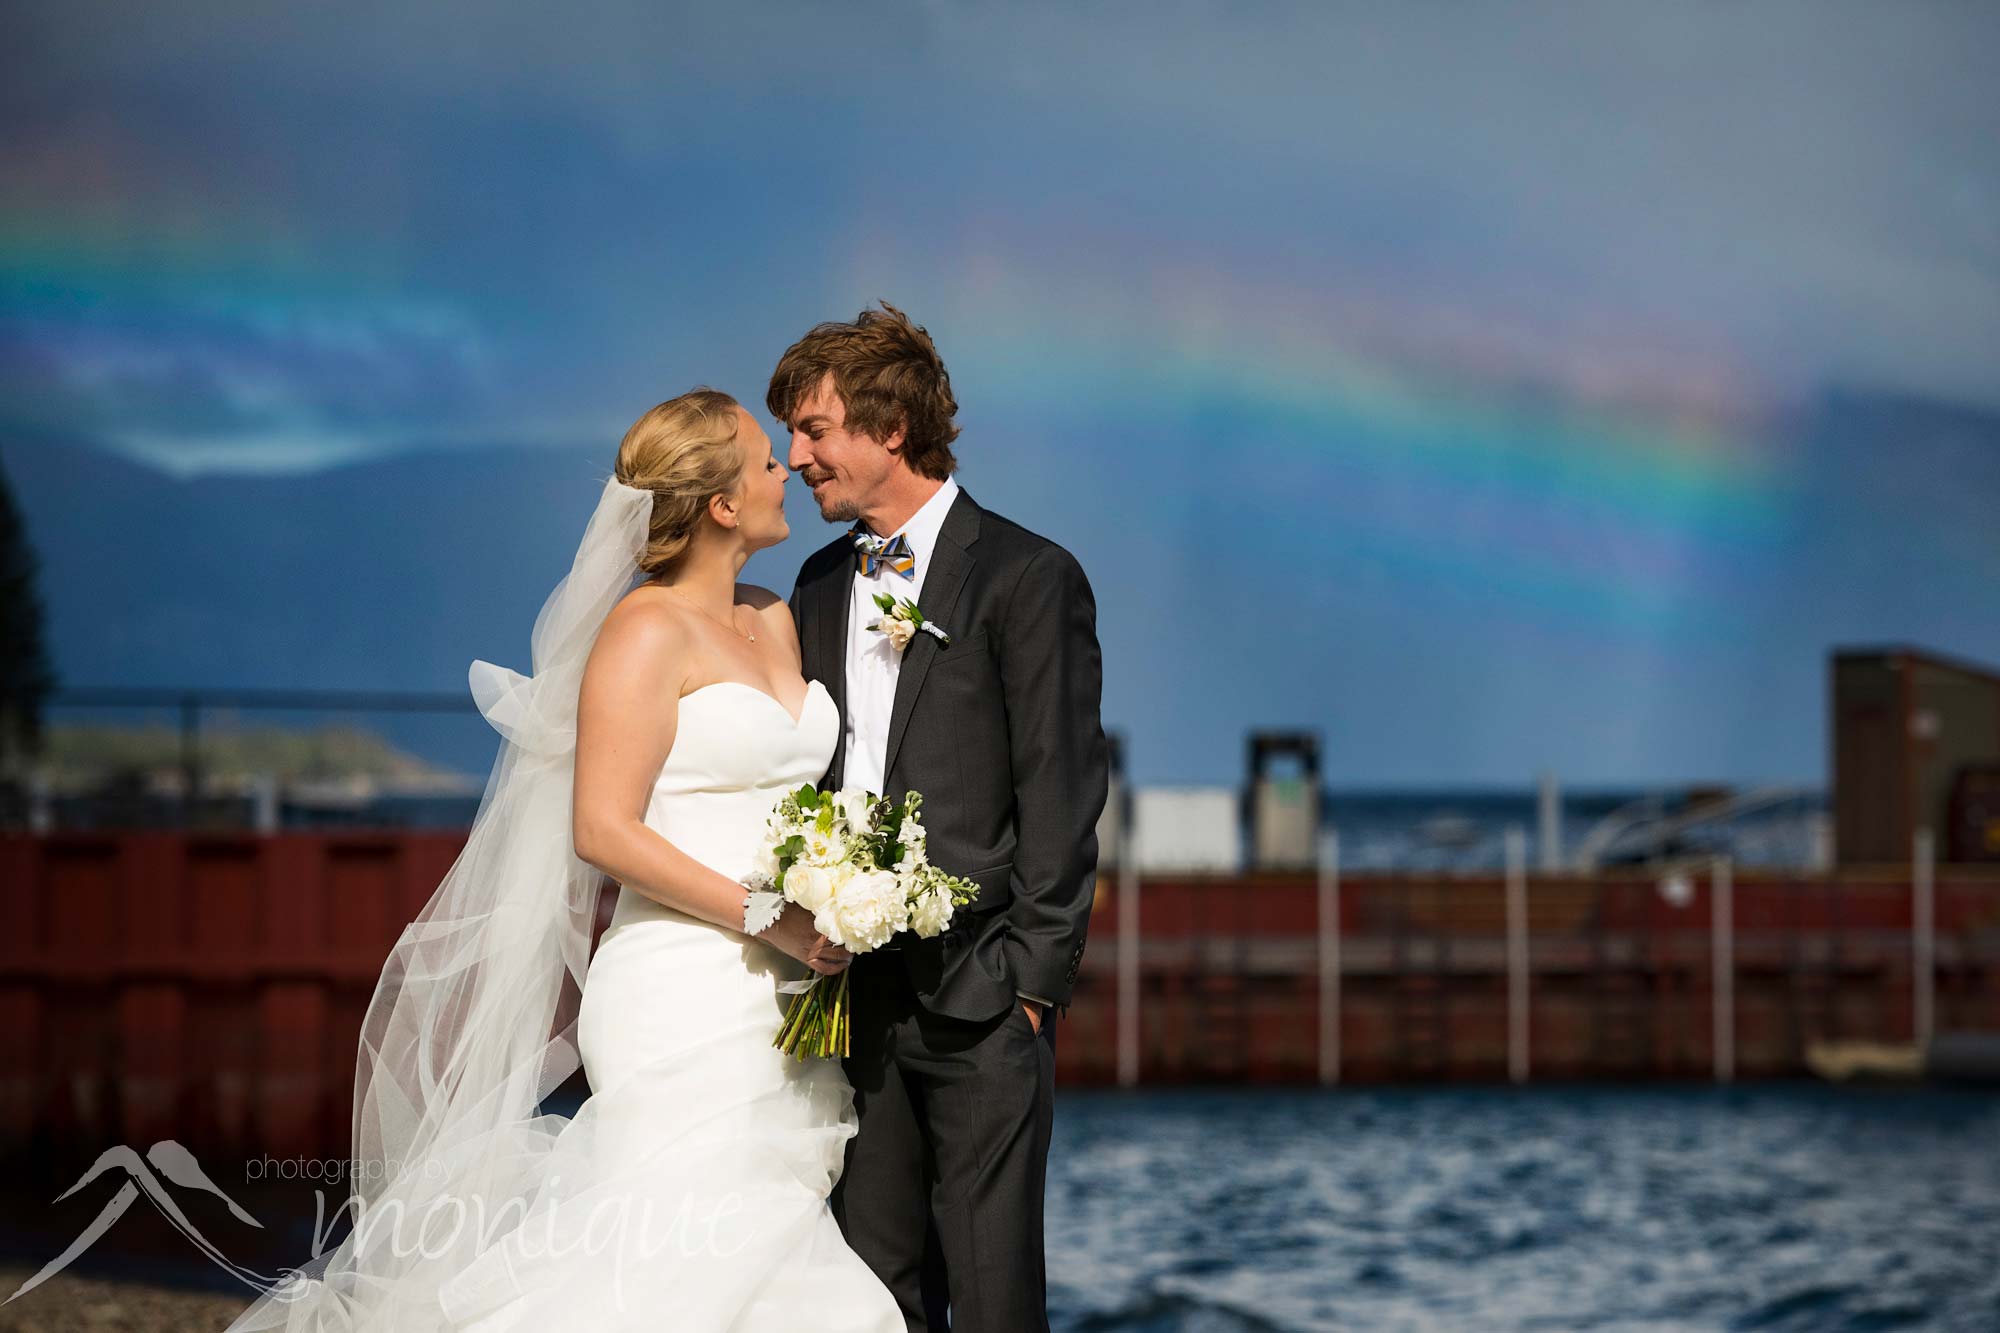 Gar Woods wedding photography, Lake Tahoe wedding, couple with a rainbow